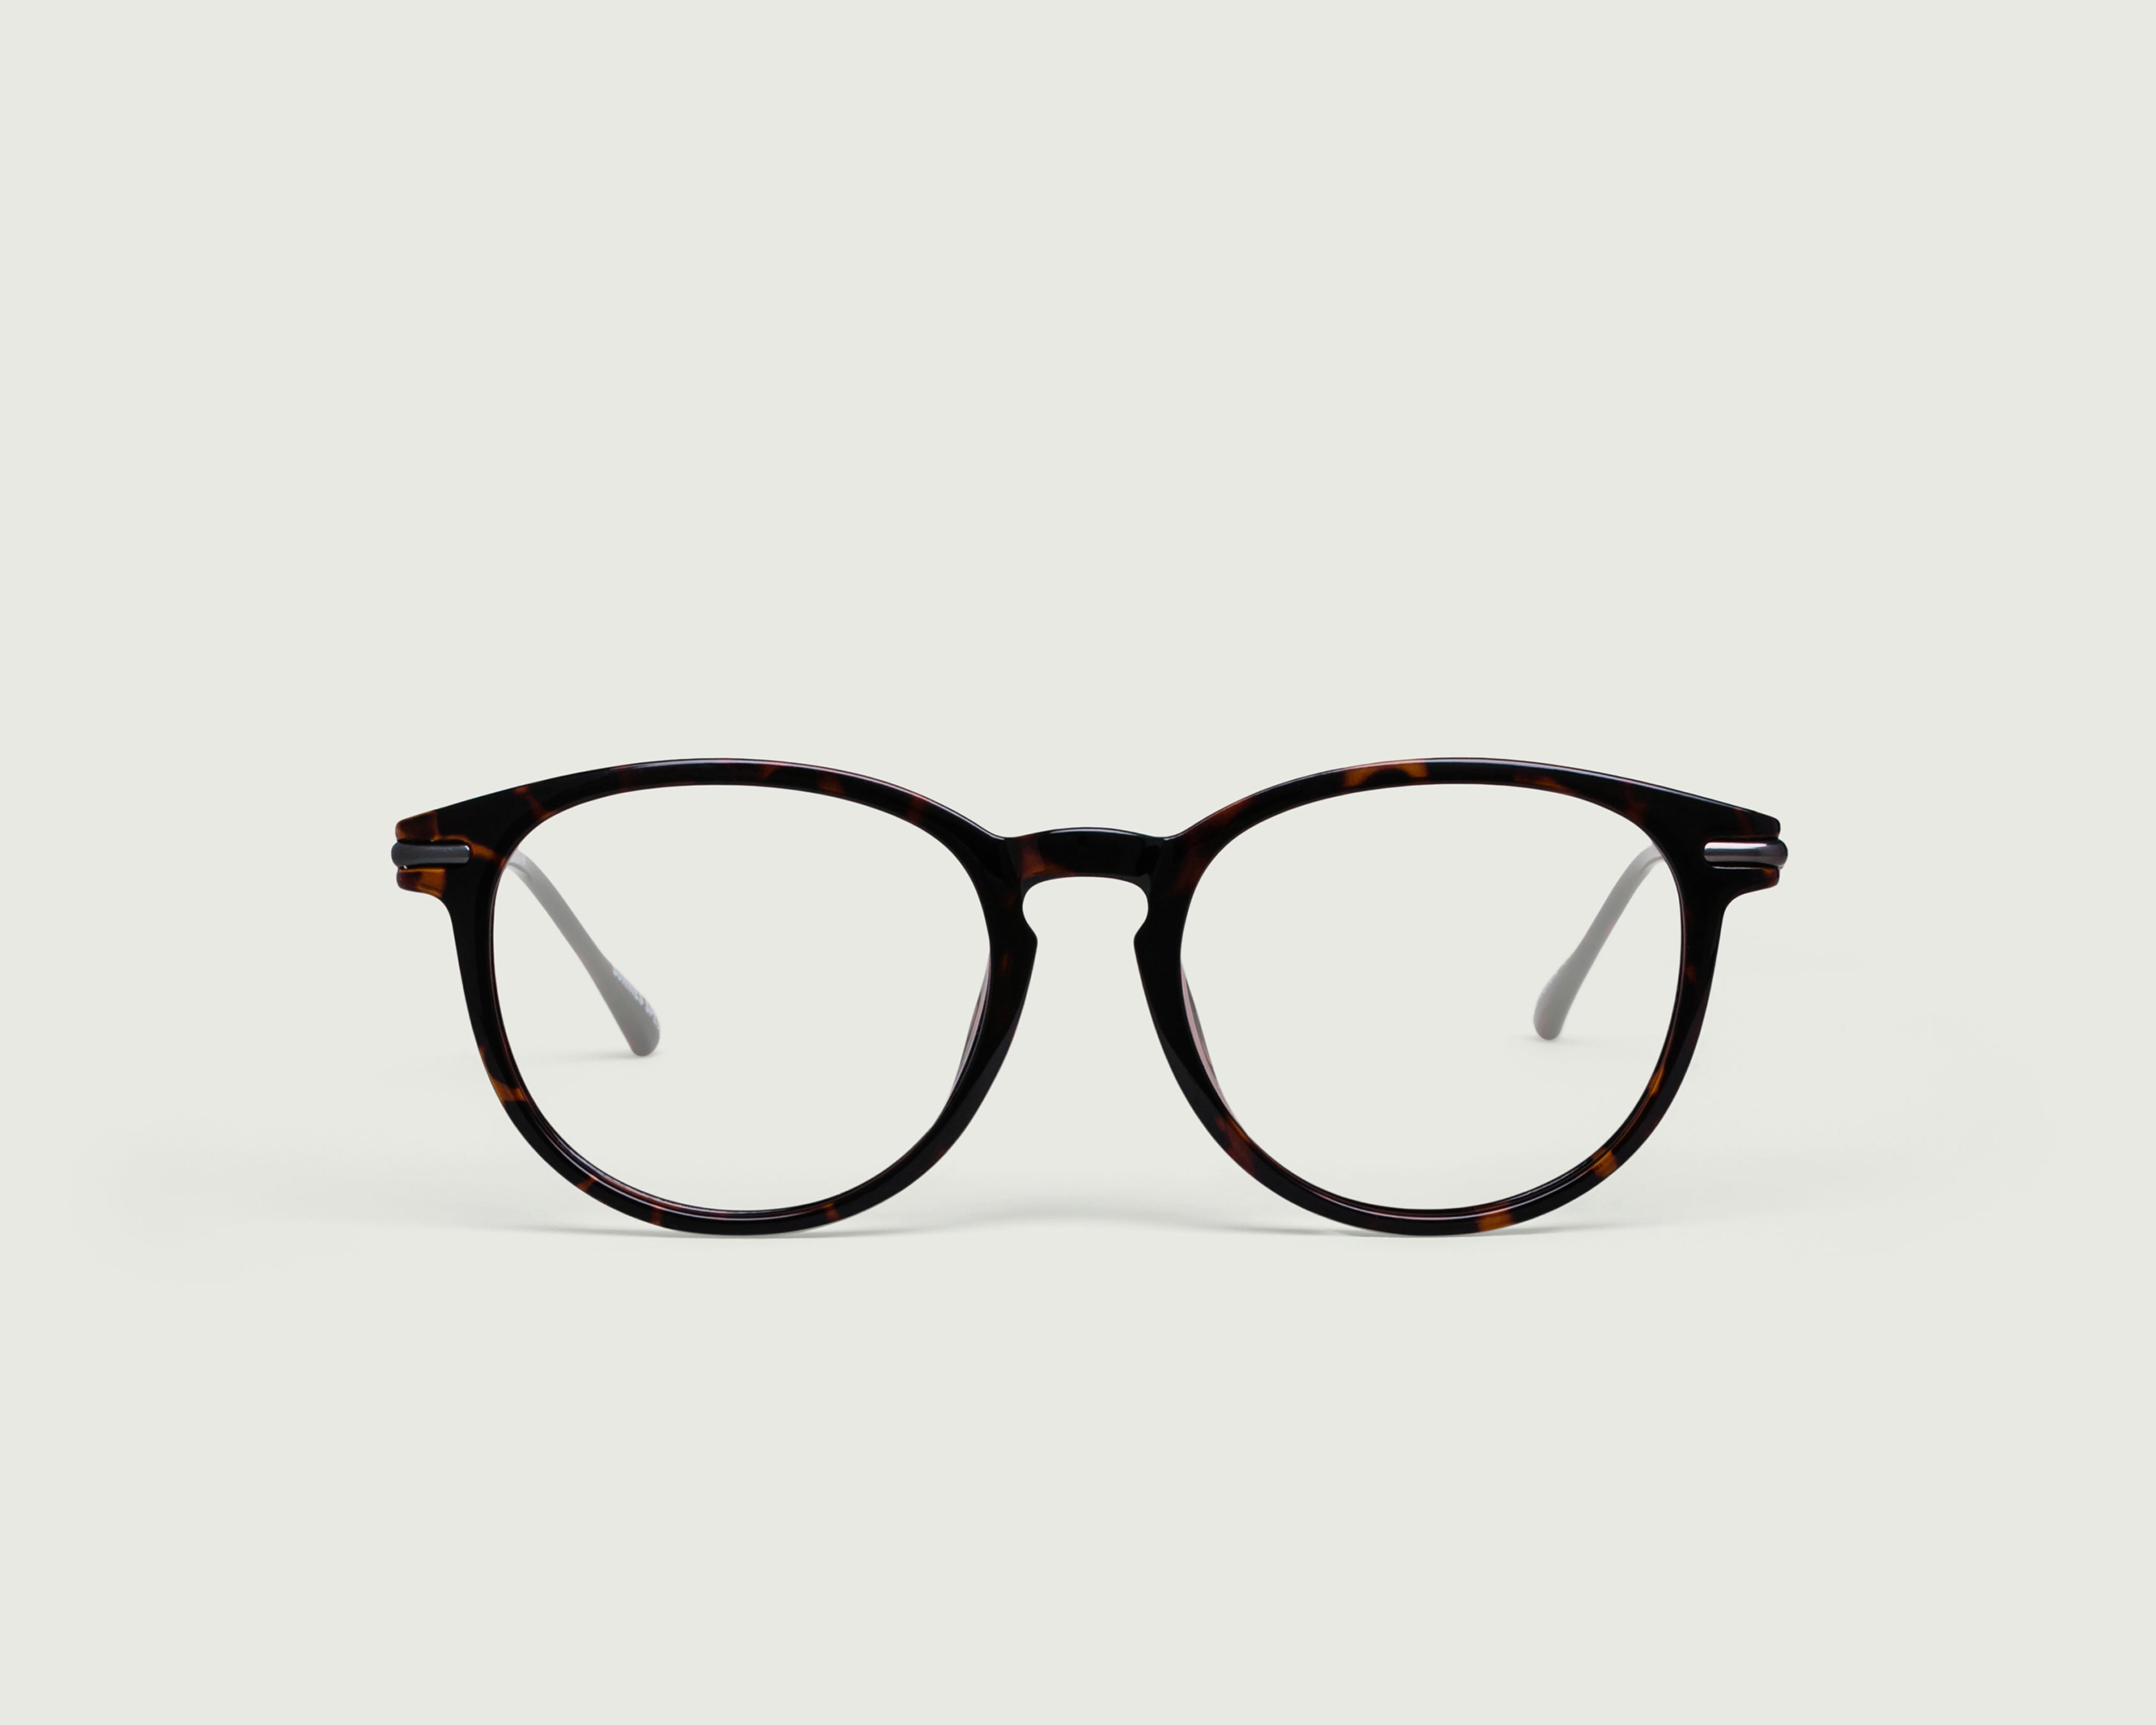 Tort::Morgan Eyeglasses round tort plastic front